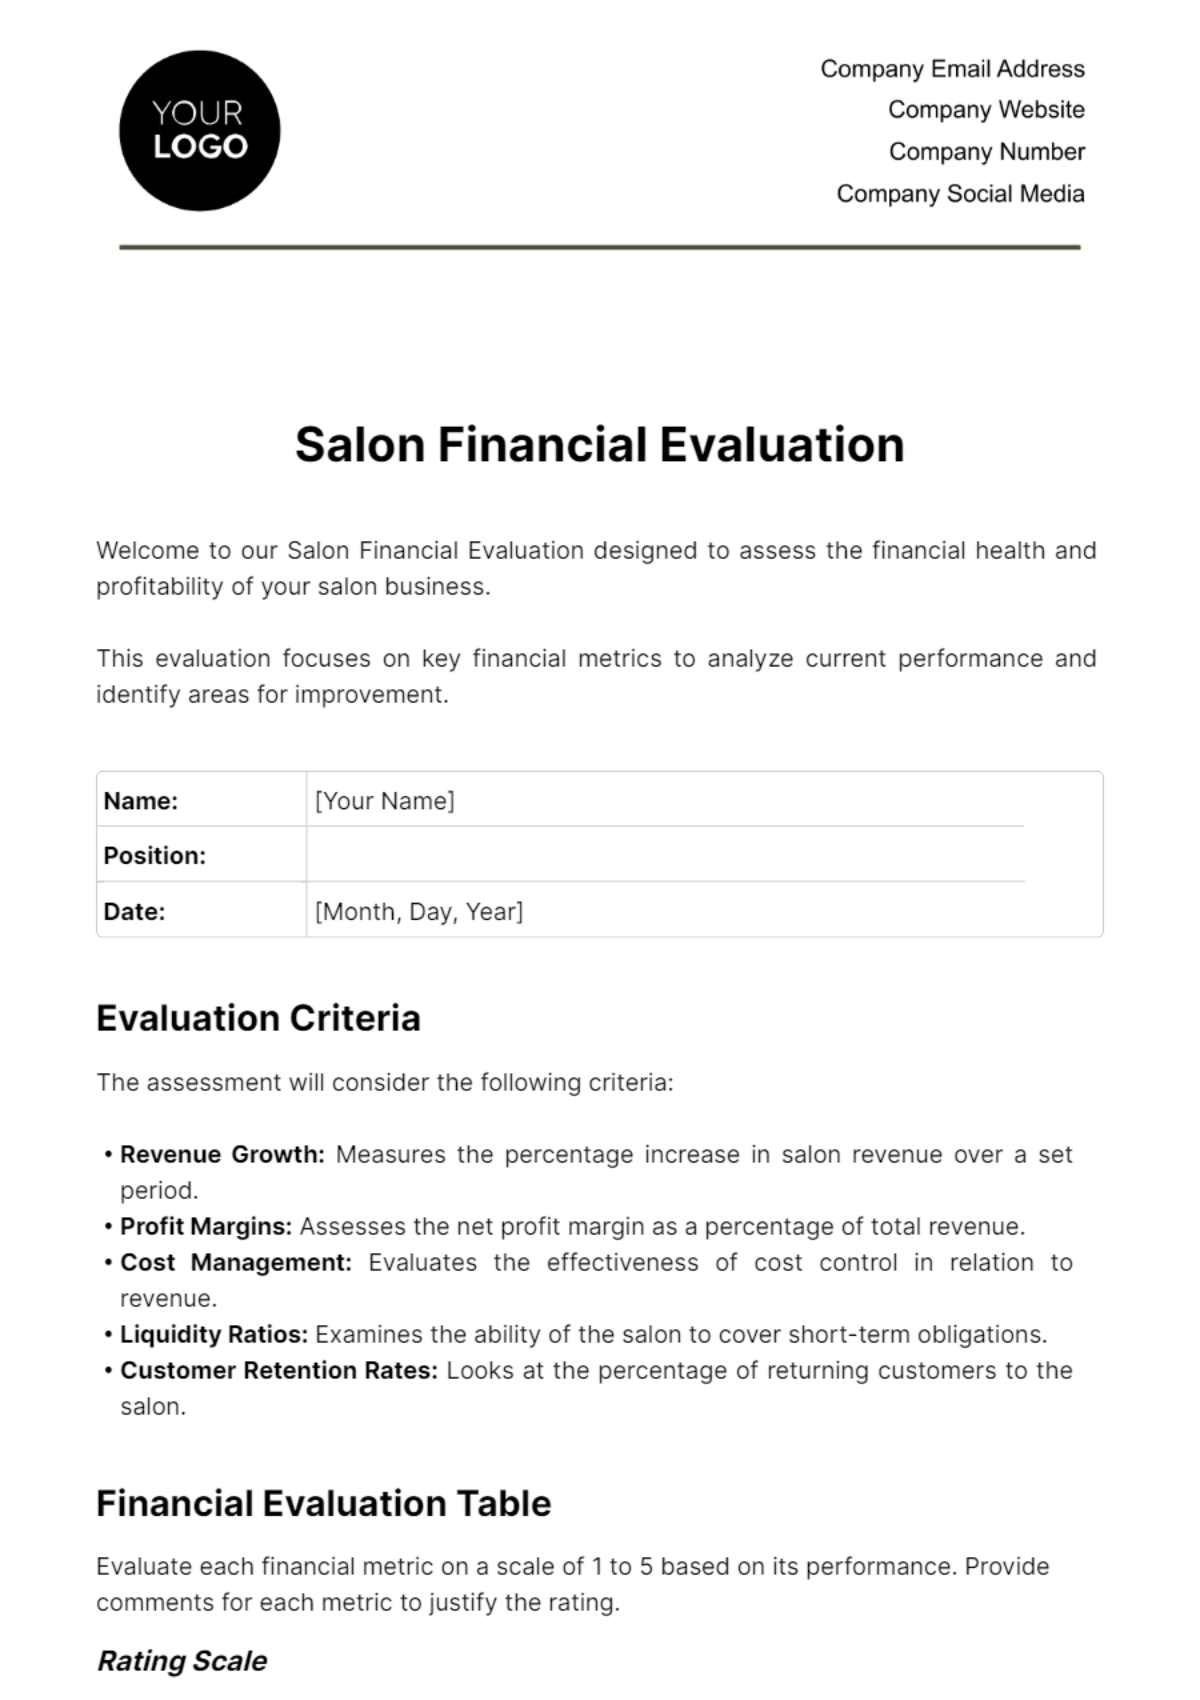 Salon Financial Evaluation Template